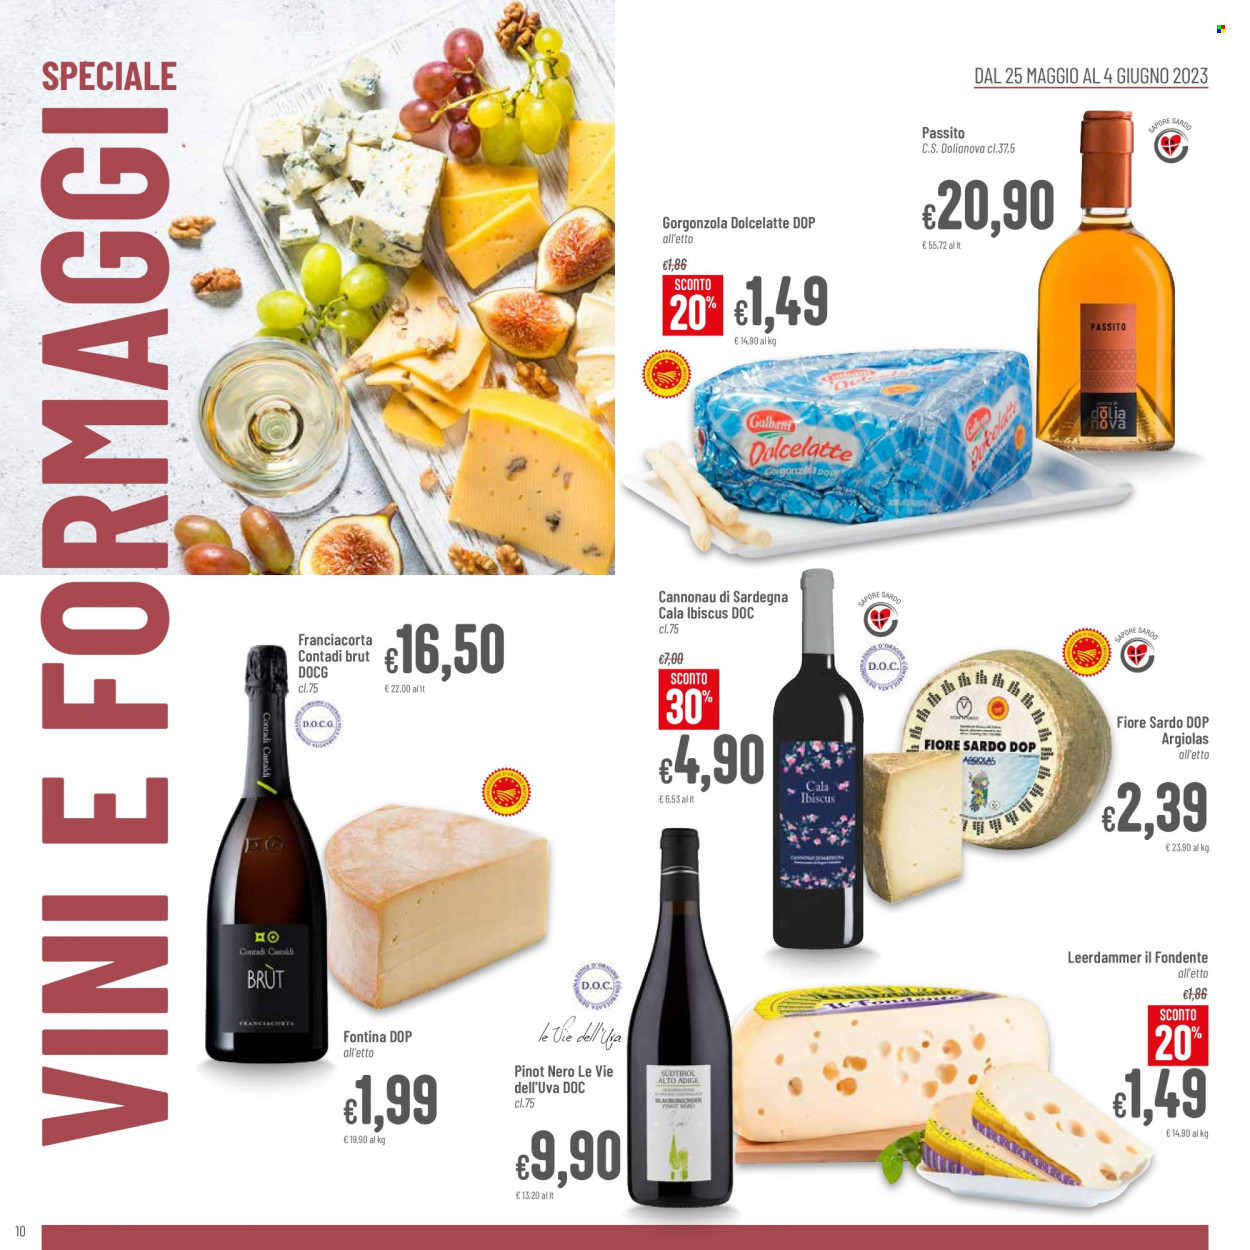 thumbnail - Volantino Pan - 25/5/2023 - 4/6/2023 - Prodotti in offerta - Galbani, formaggio, Leerdammer, fontina, gorgonzola, vino rosso, Pinot Nero, vino, Cannonau. Pagina 10.